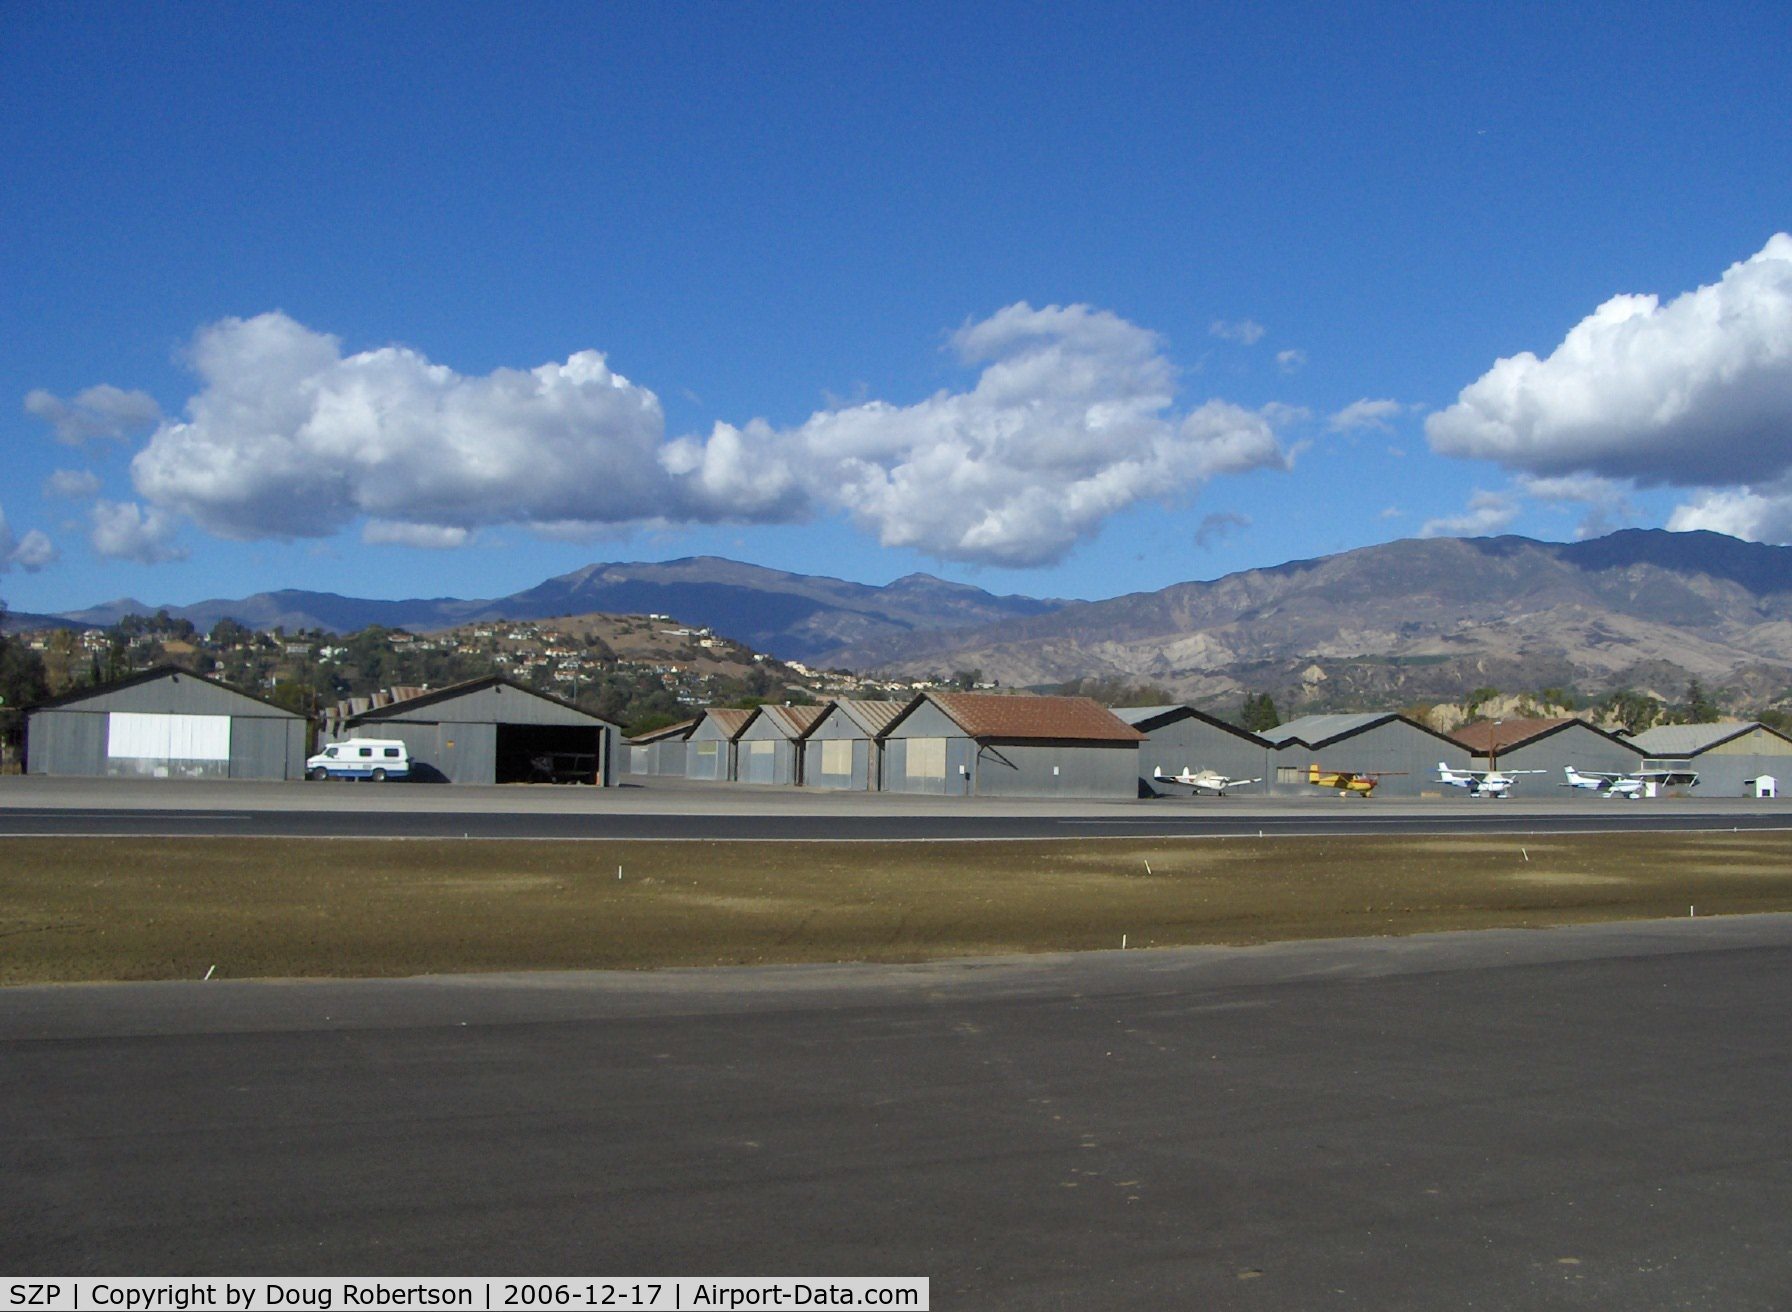 Santa Paula Airport (SZP) - Old Hangars, Topa Topa Mountains, Santa Paula Ridge, Santa Paula Peak in background. Elevations:  Topa Topa Mts. 6,244 ft & 6,704 ft. Ridge 2,817 ft. Peak 4,917 ft.